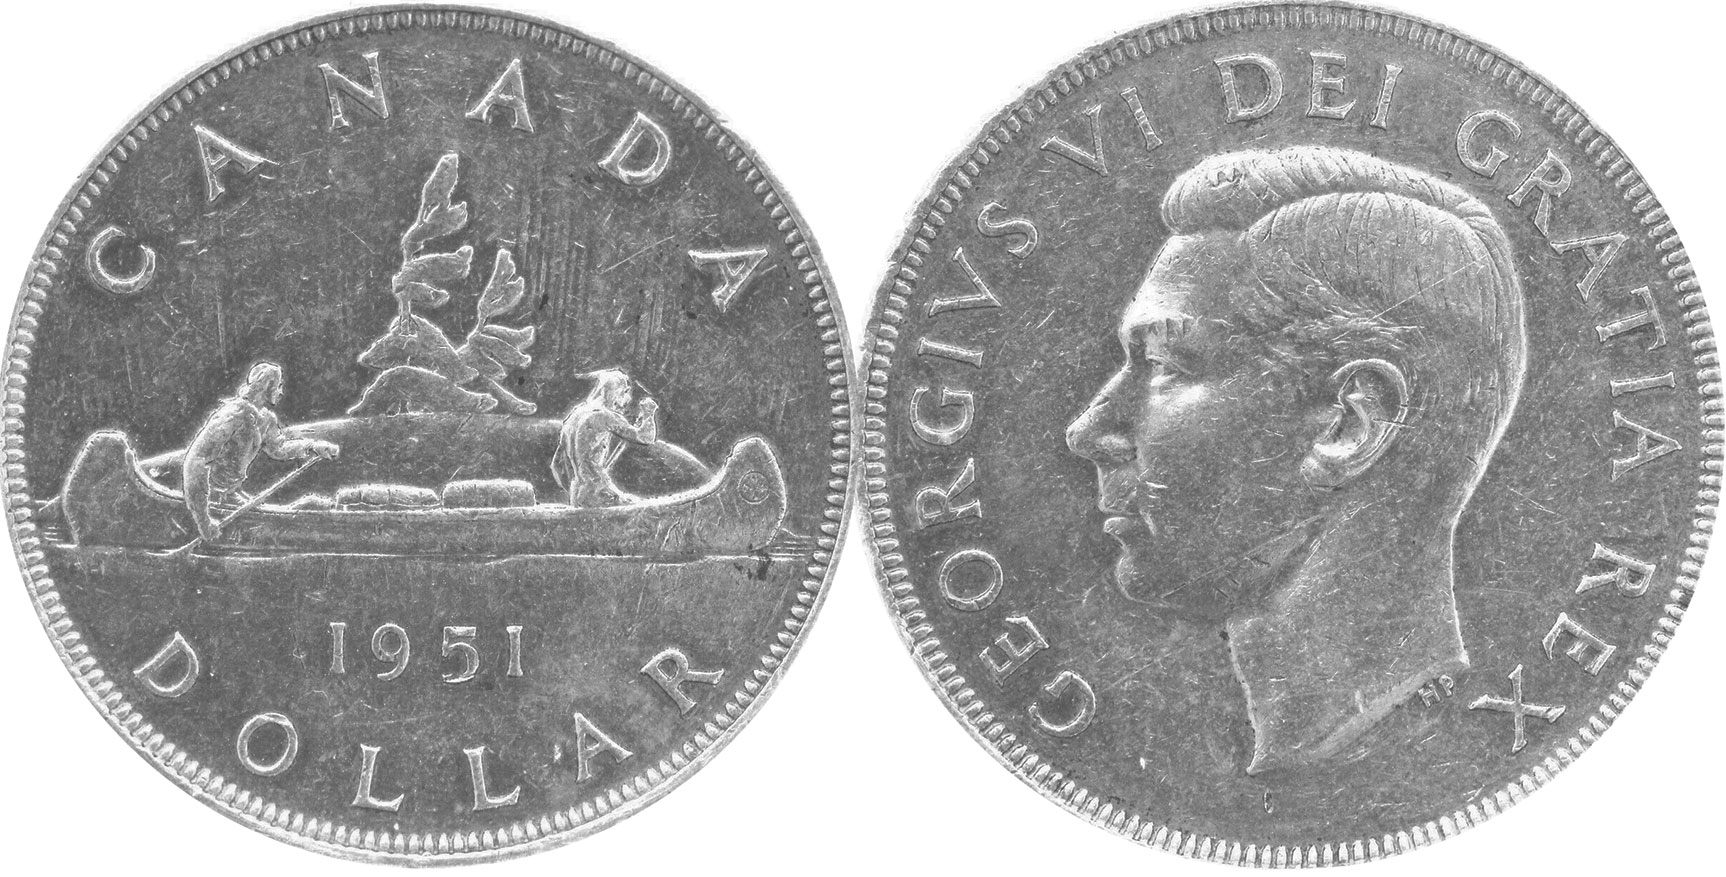 coin canadian old coin 1 dollar 1951